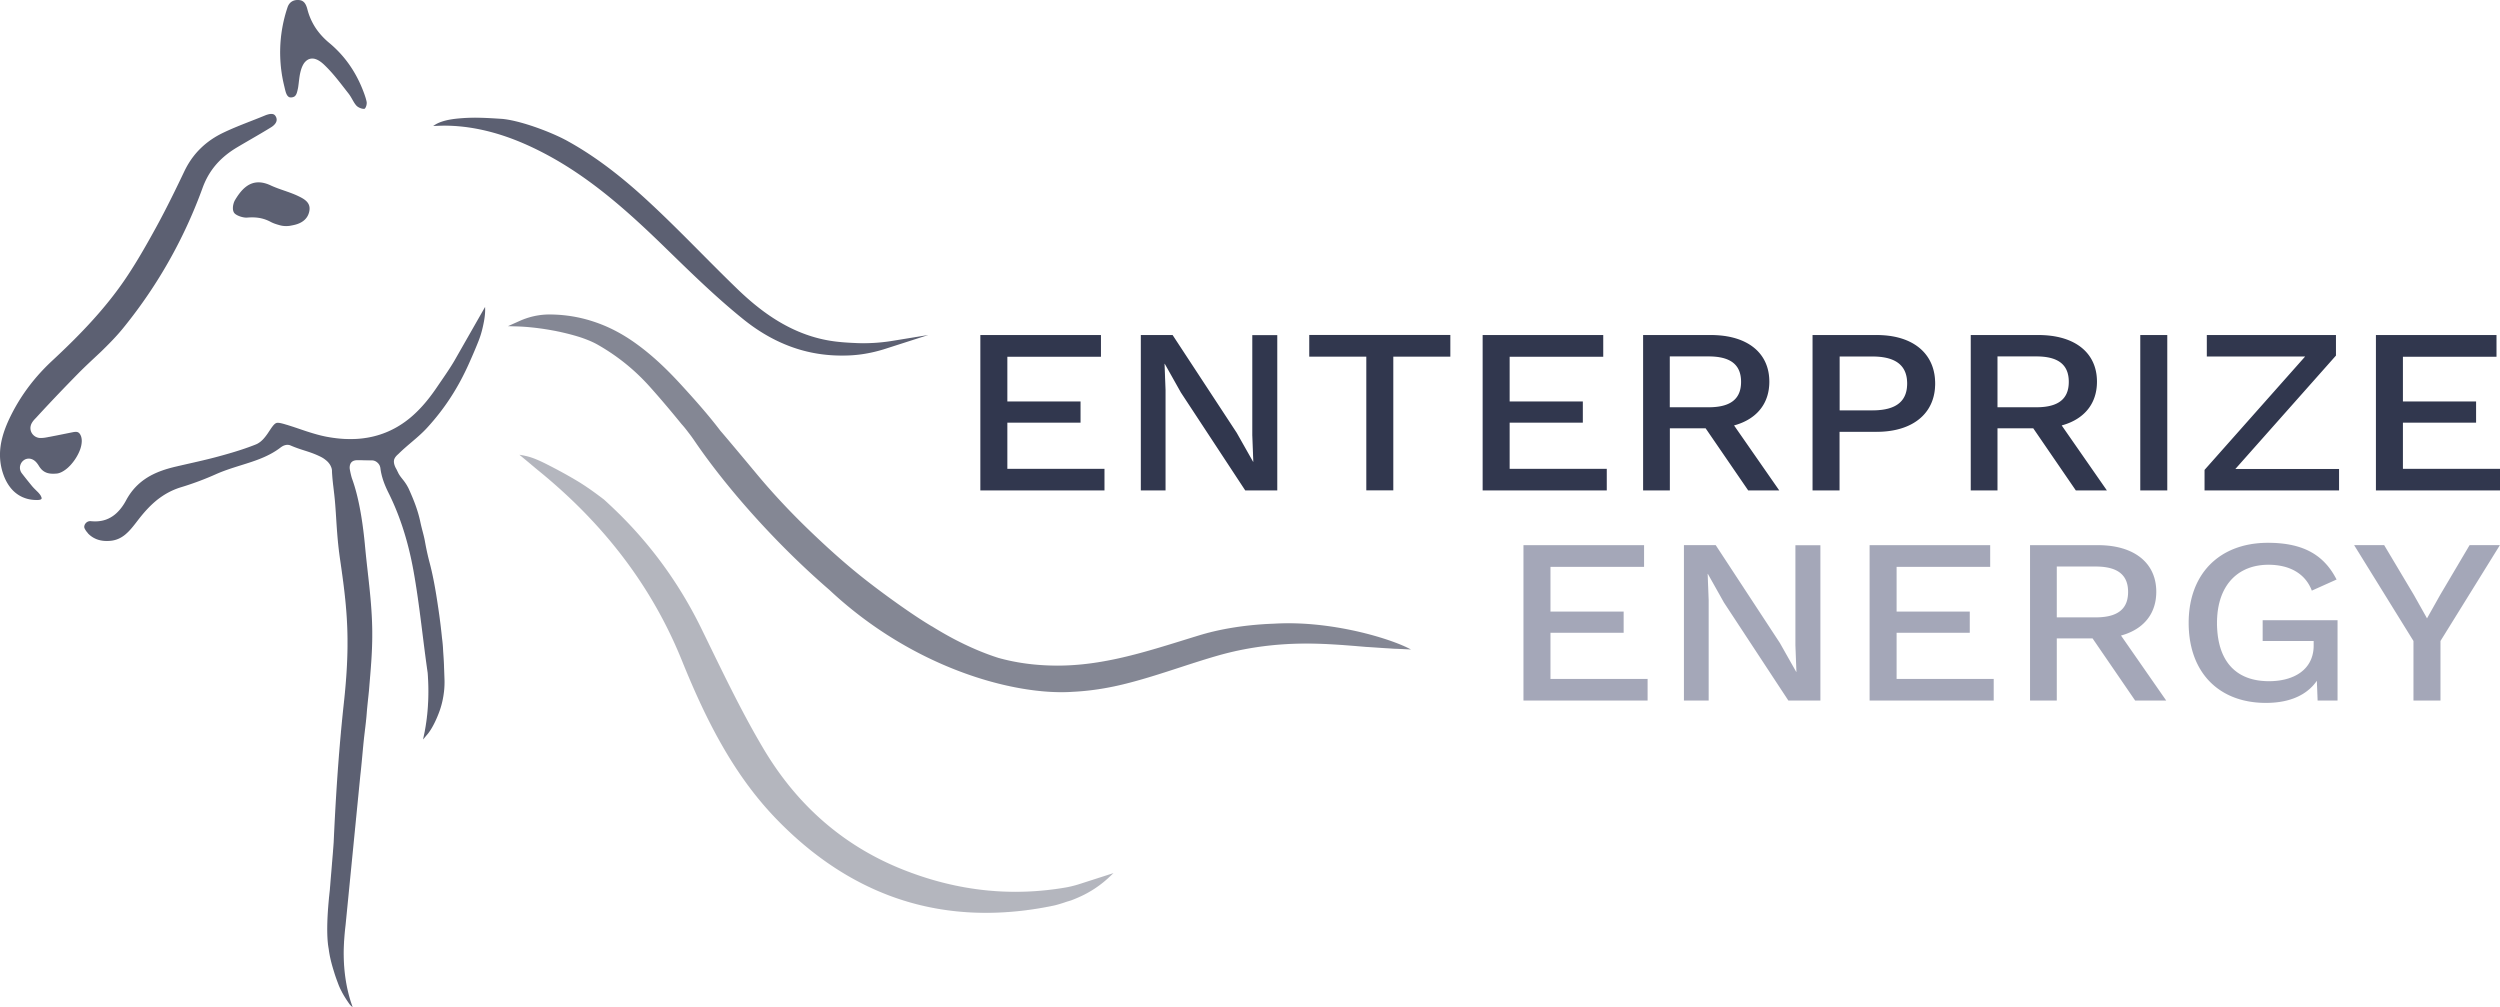 Enterprize Energy